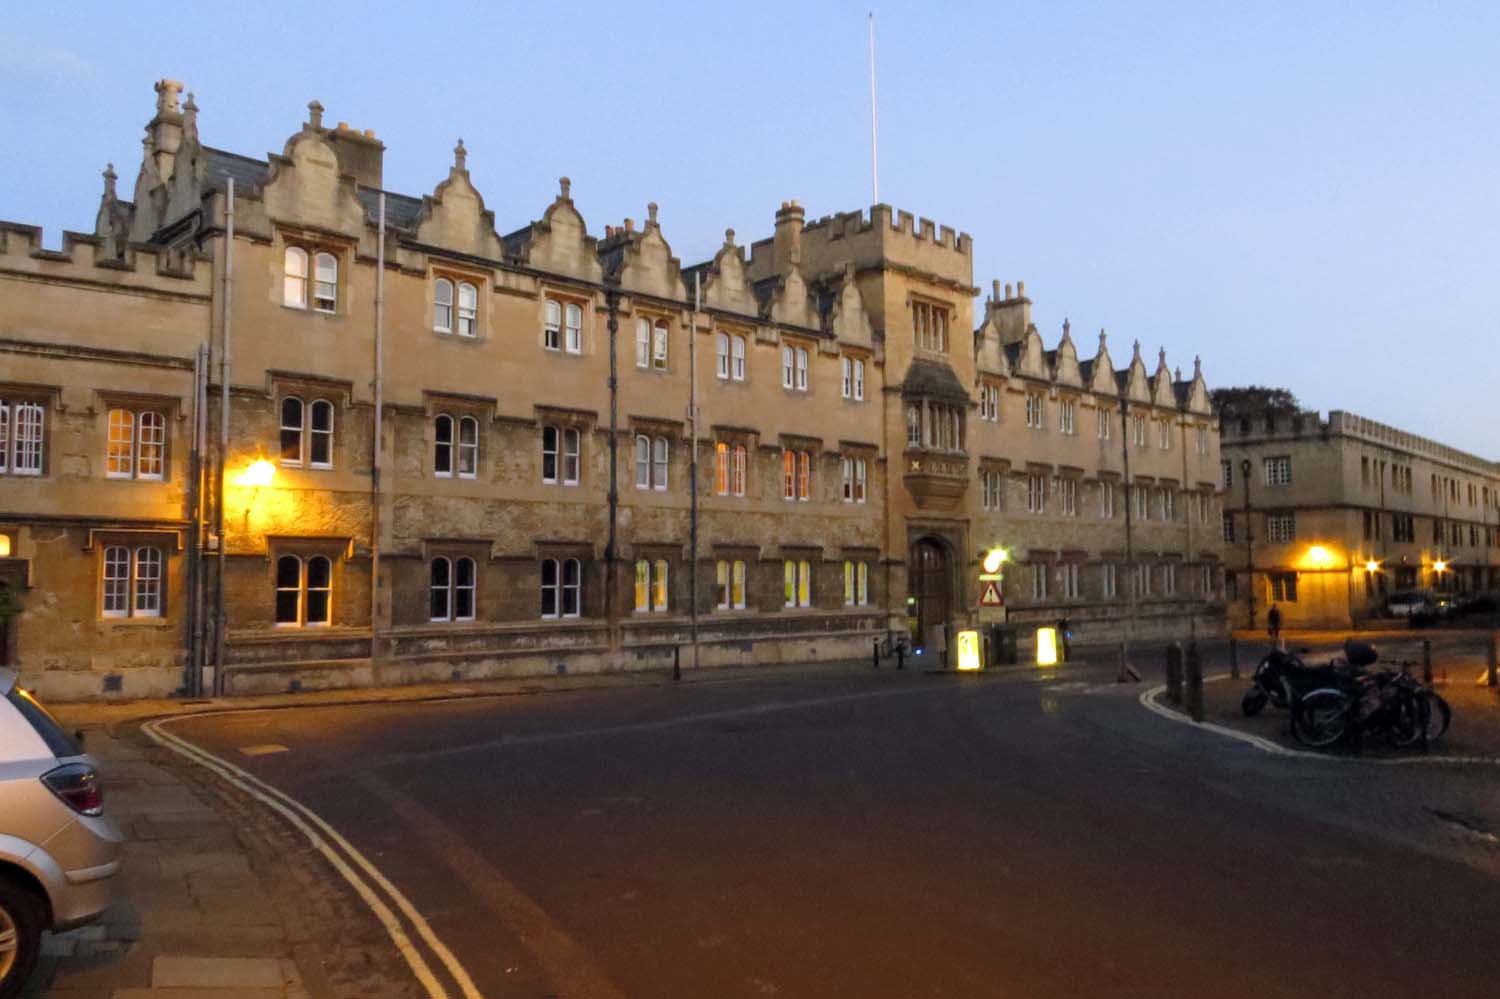 Oriel College as seen in Oriel Square, Oxford.